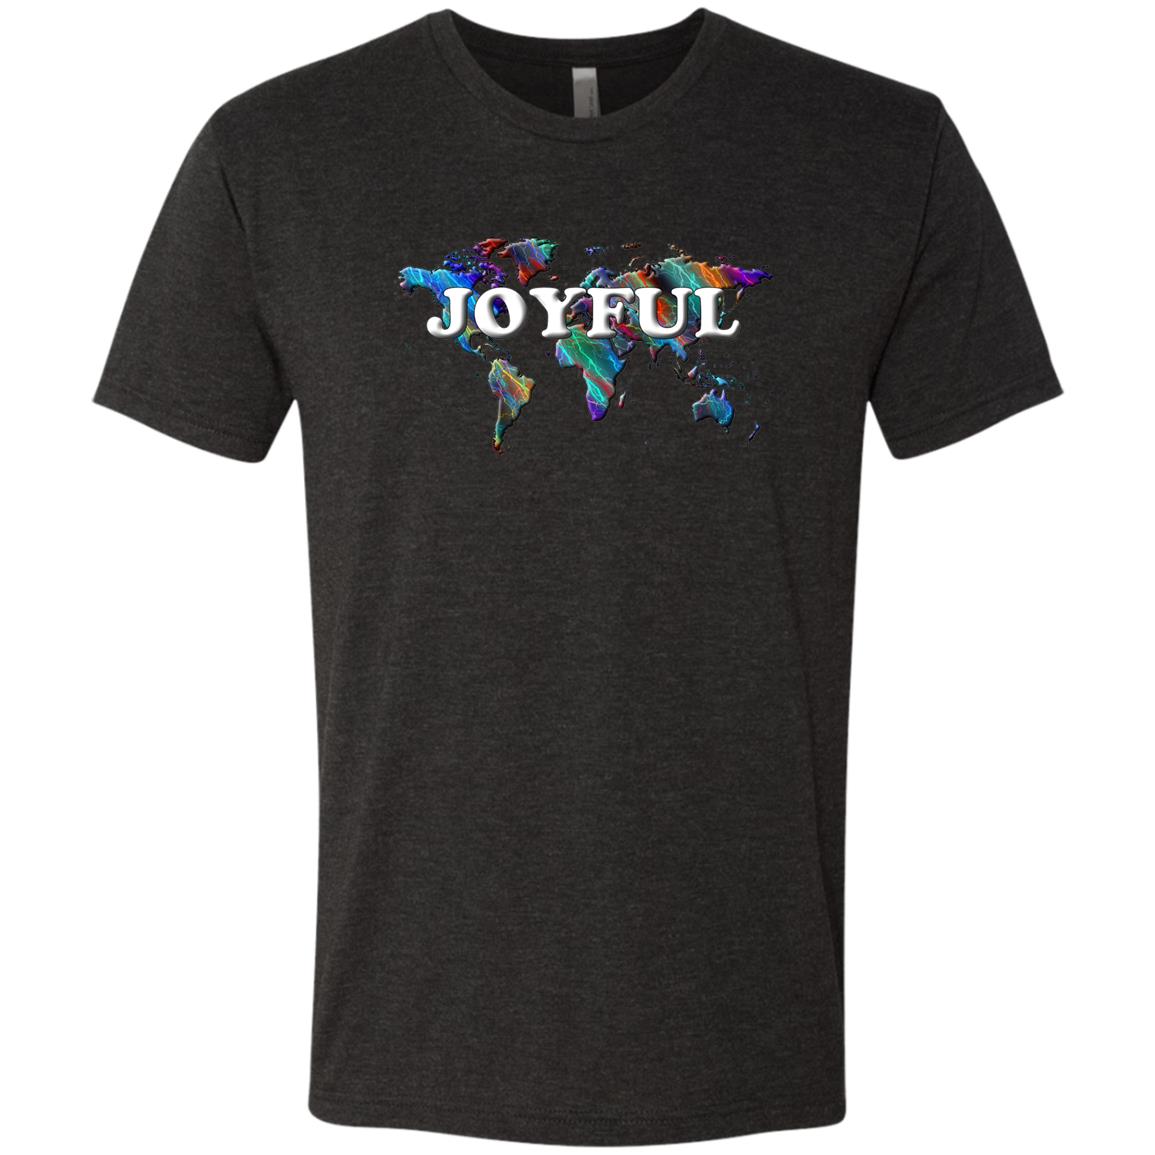 Joyful Statement T-Shirt